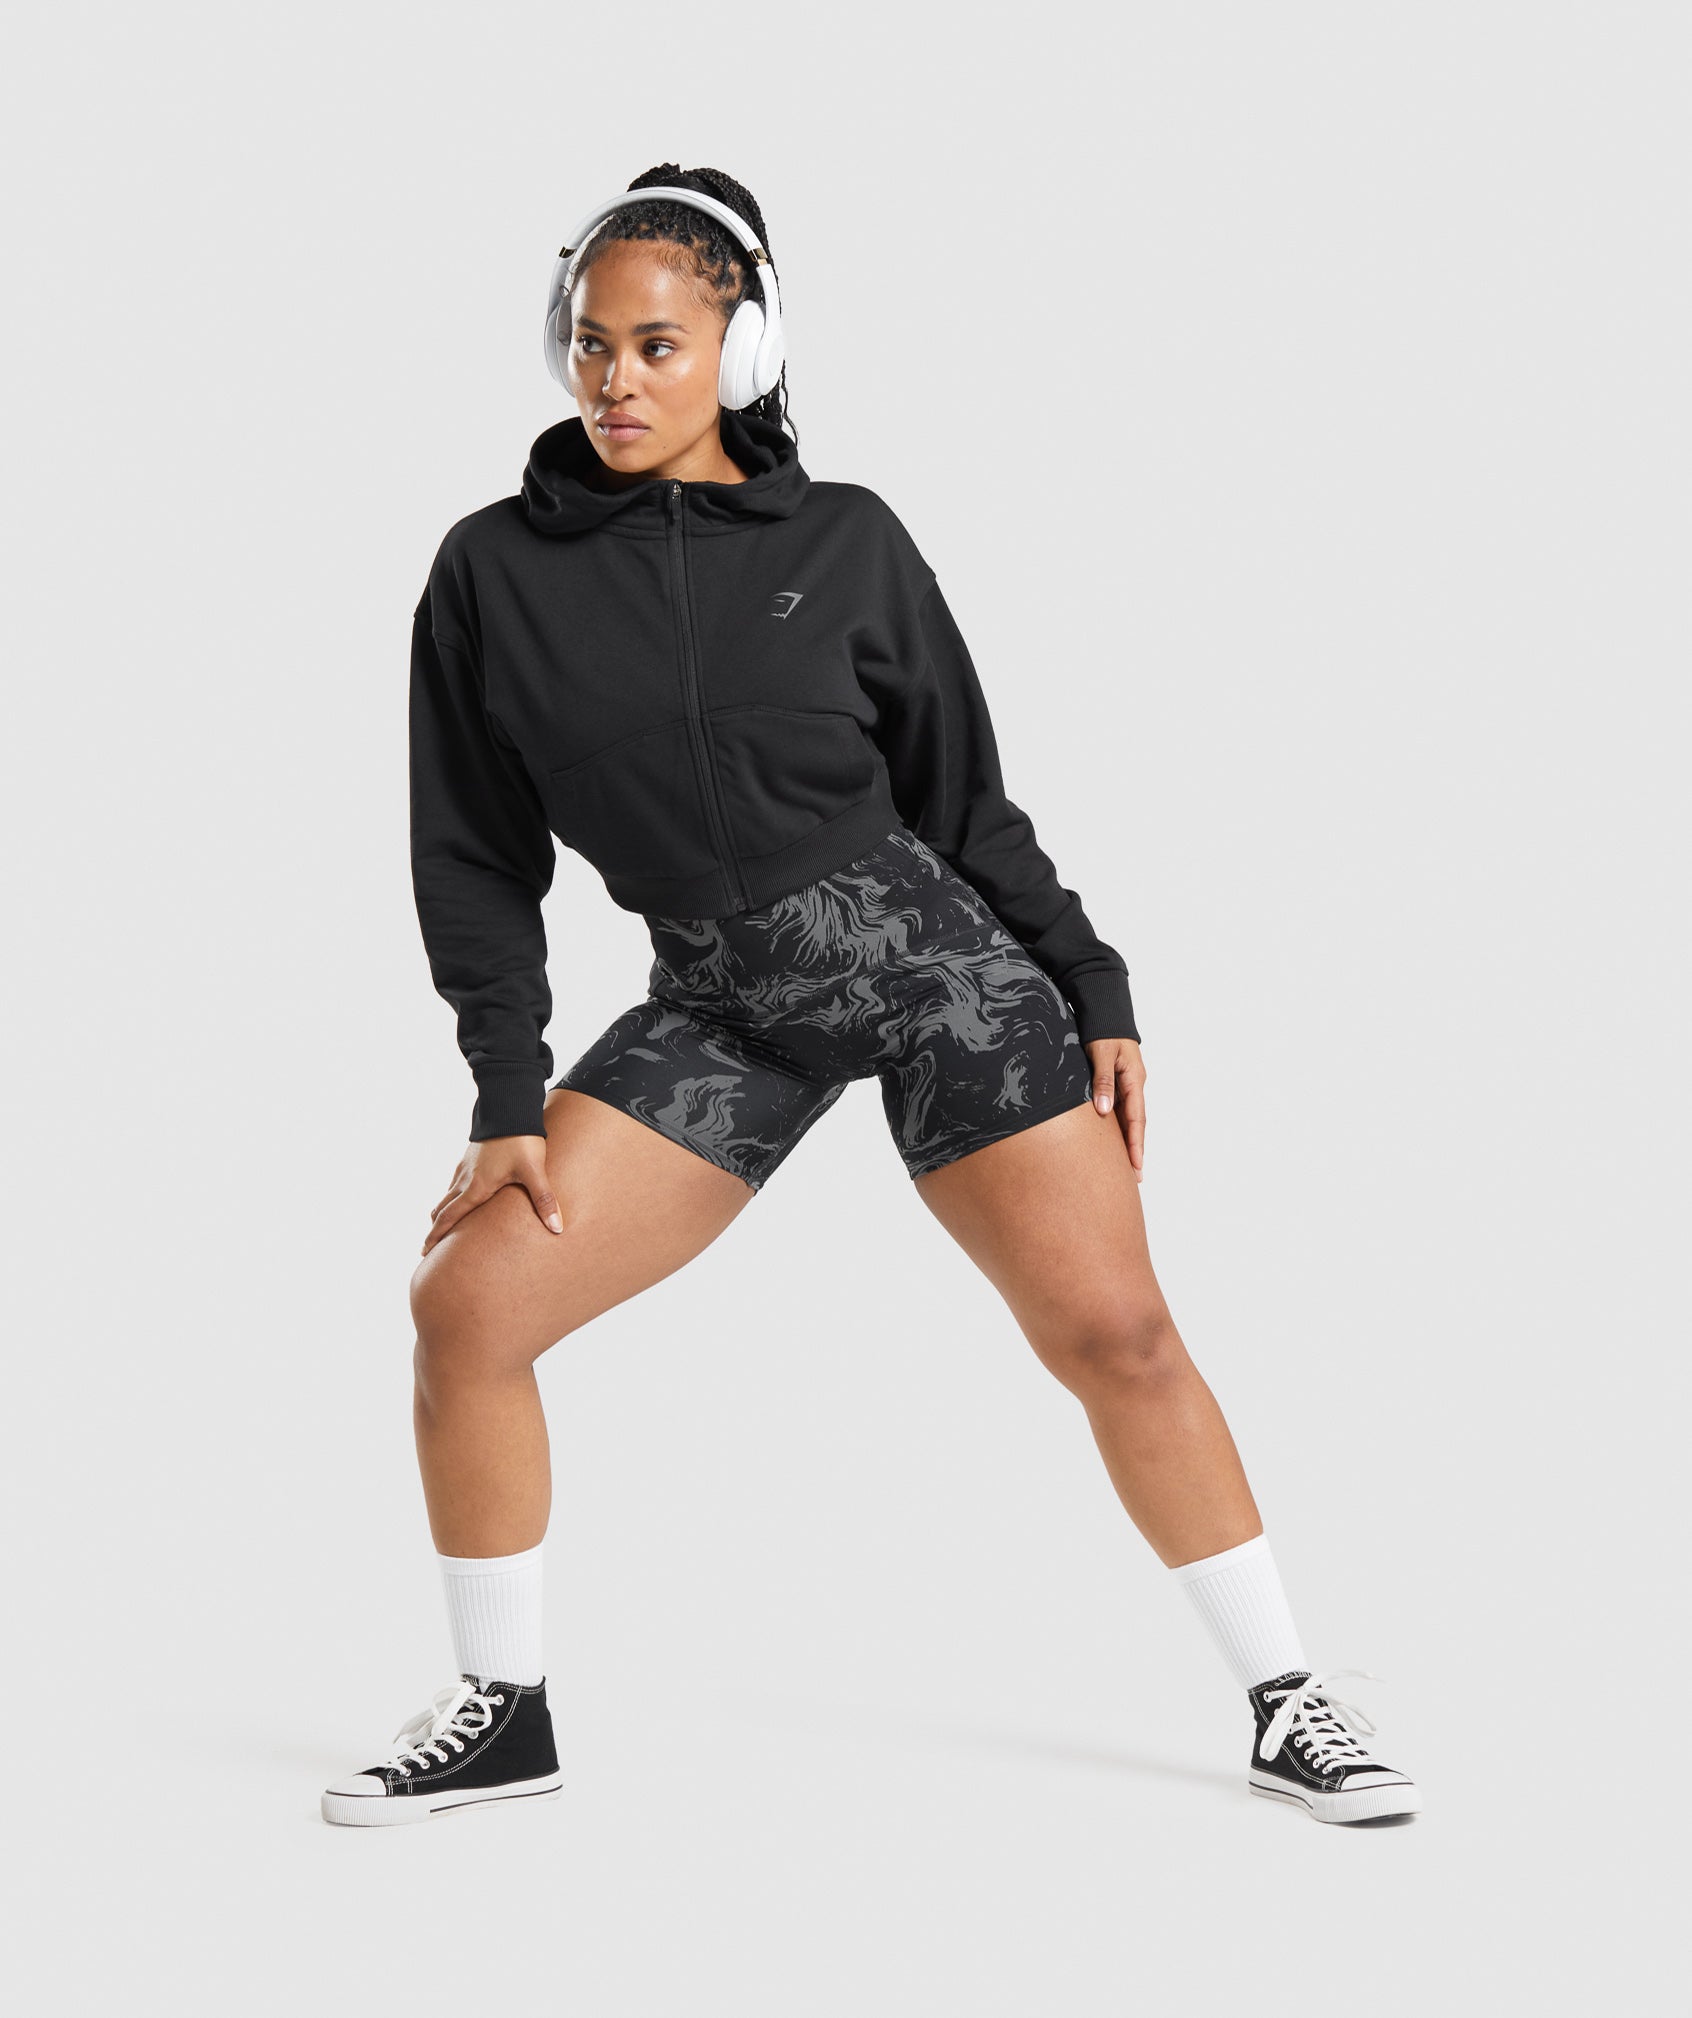 Gymshark Women's Power Original Tight Elastic Shorts JM3 Black Small NWT